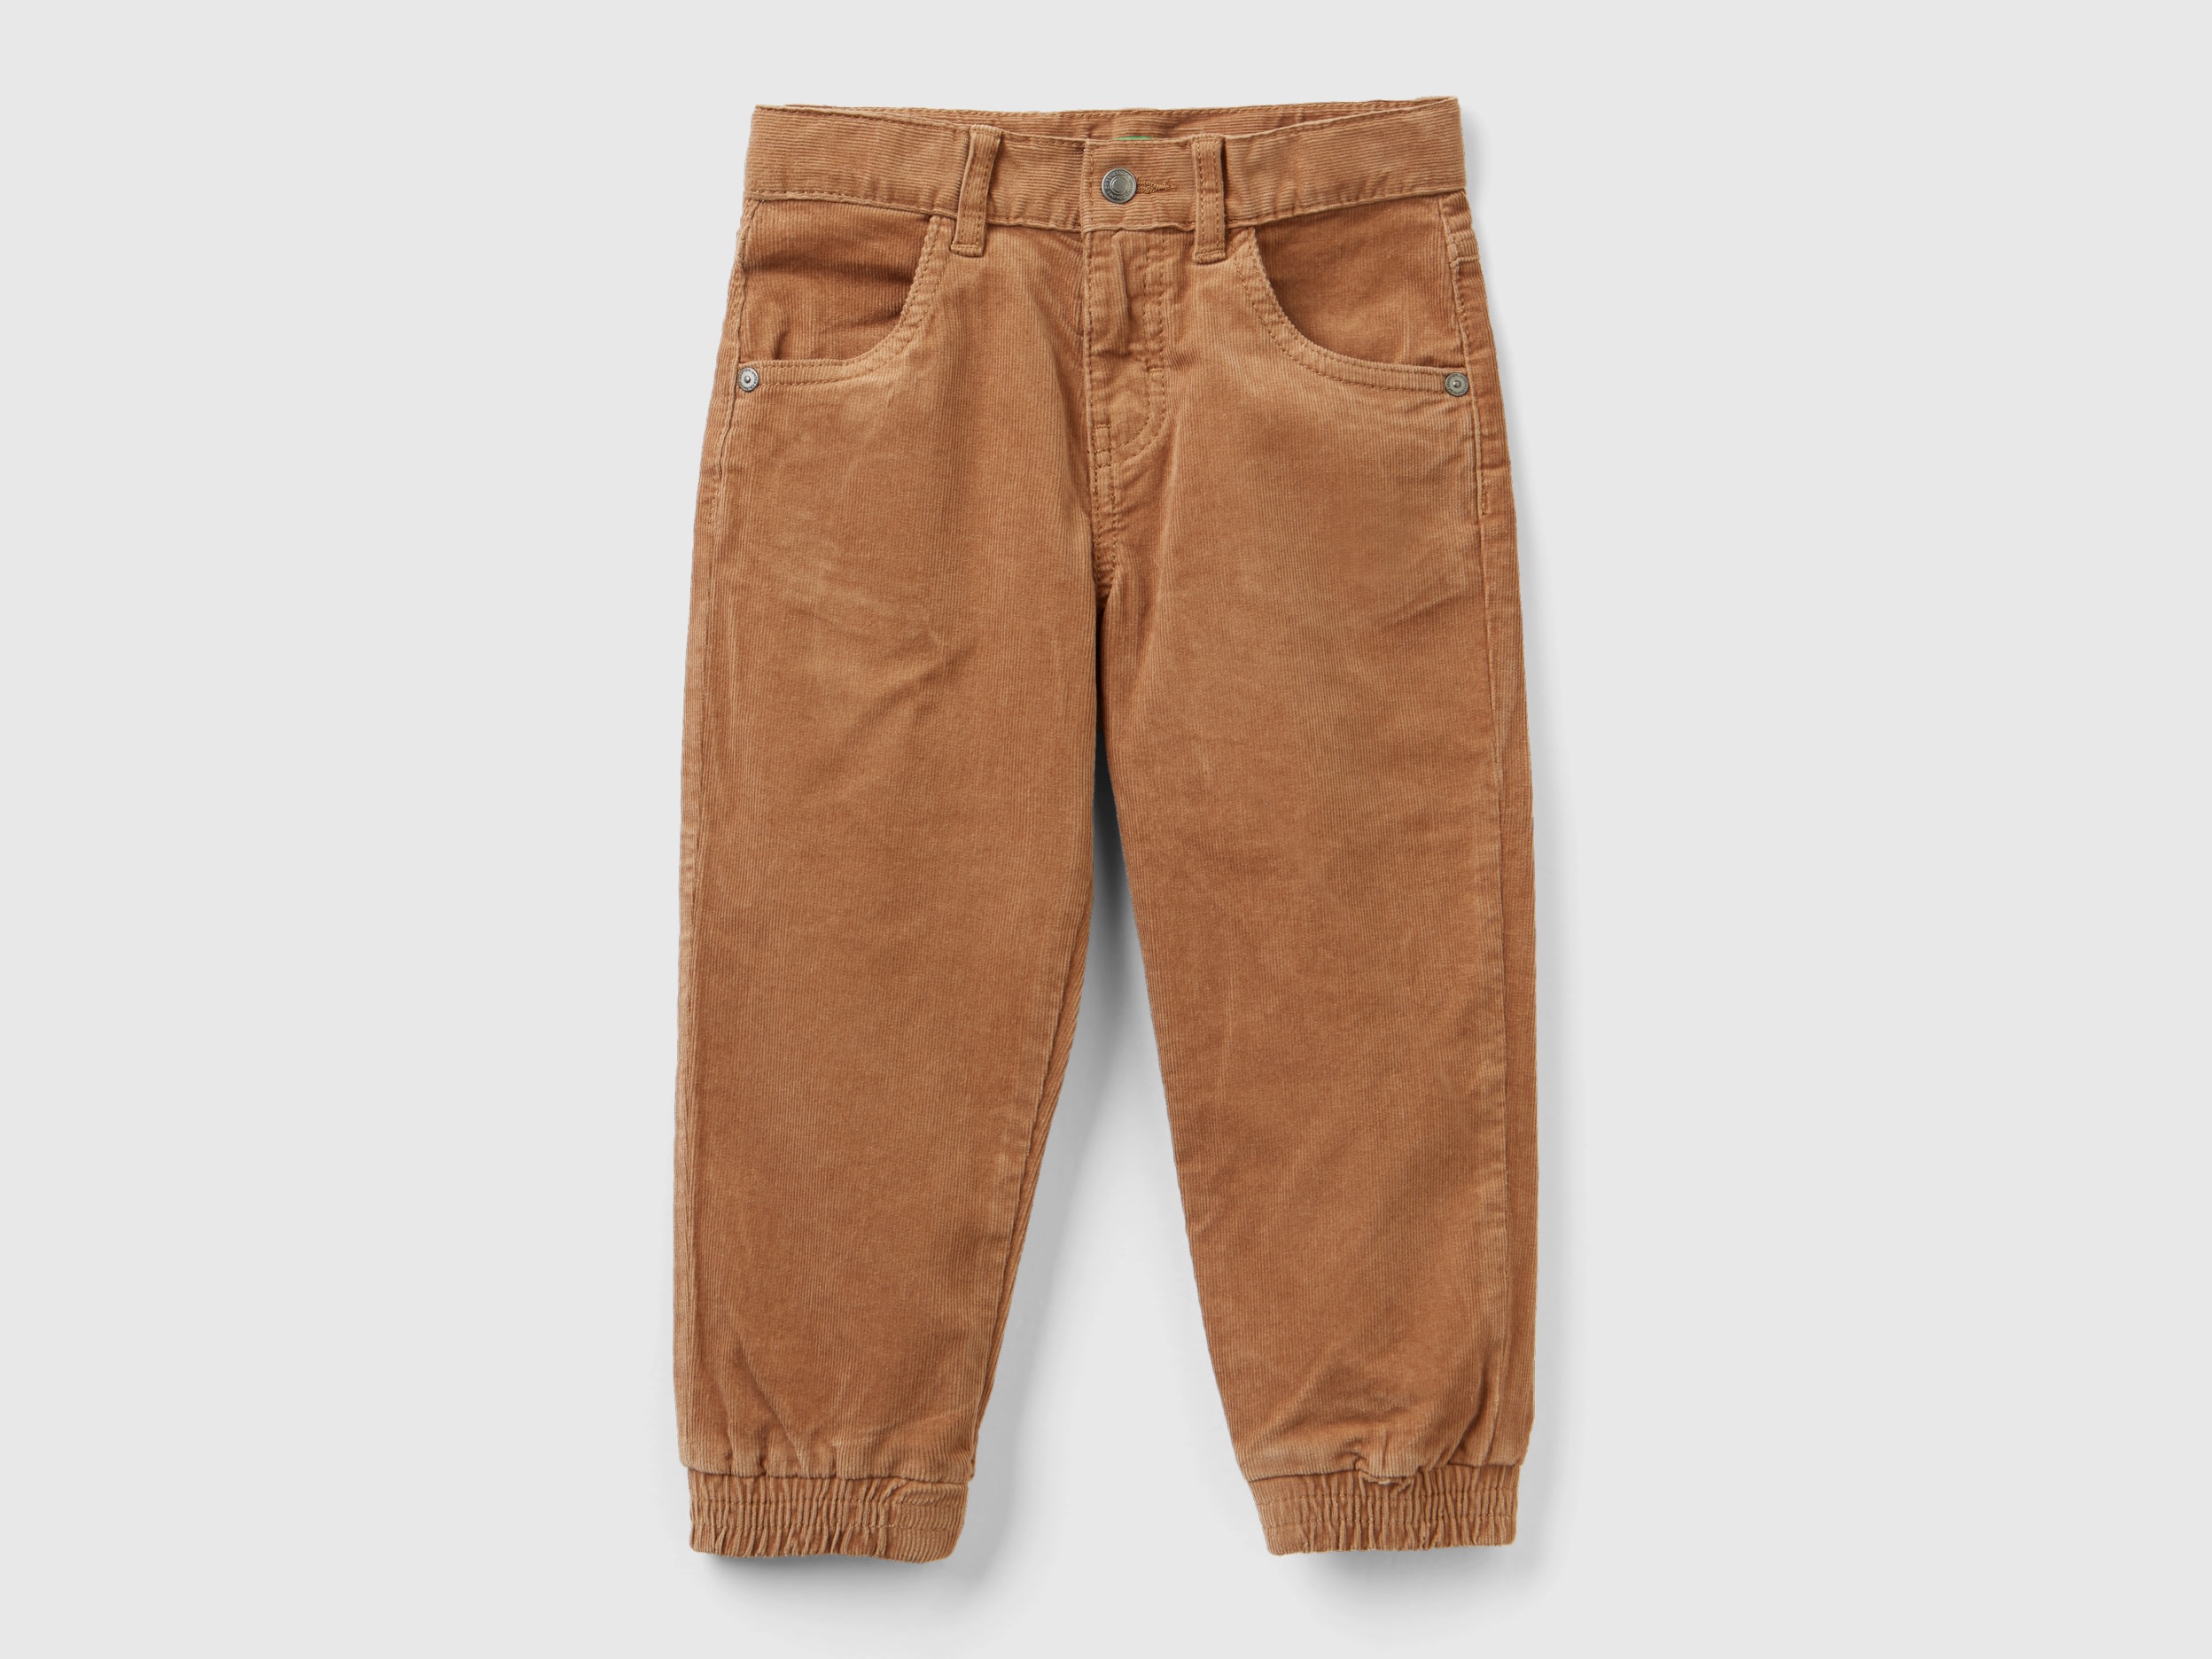 Benetton, Stretch Corduroy Trousers, size 12-18, Beige, Kids